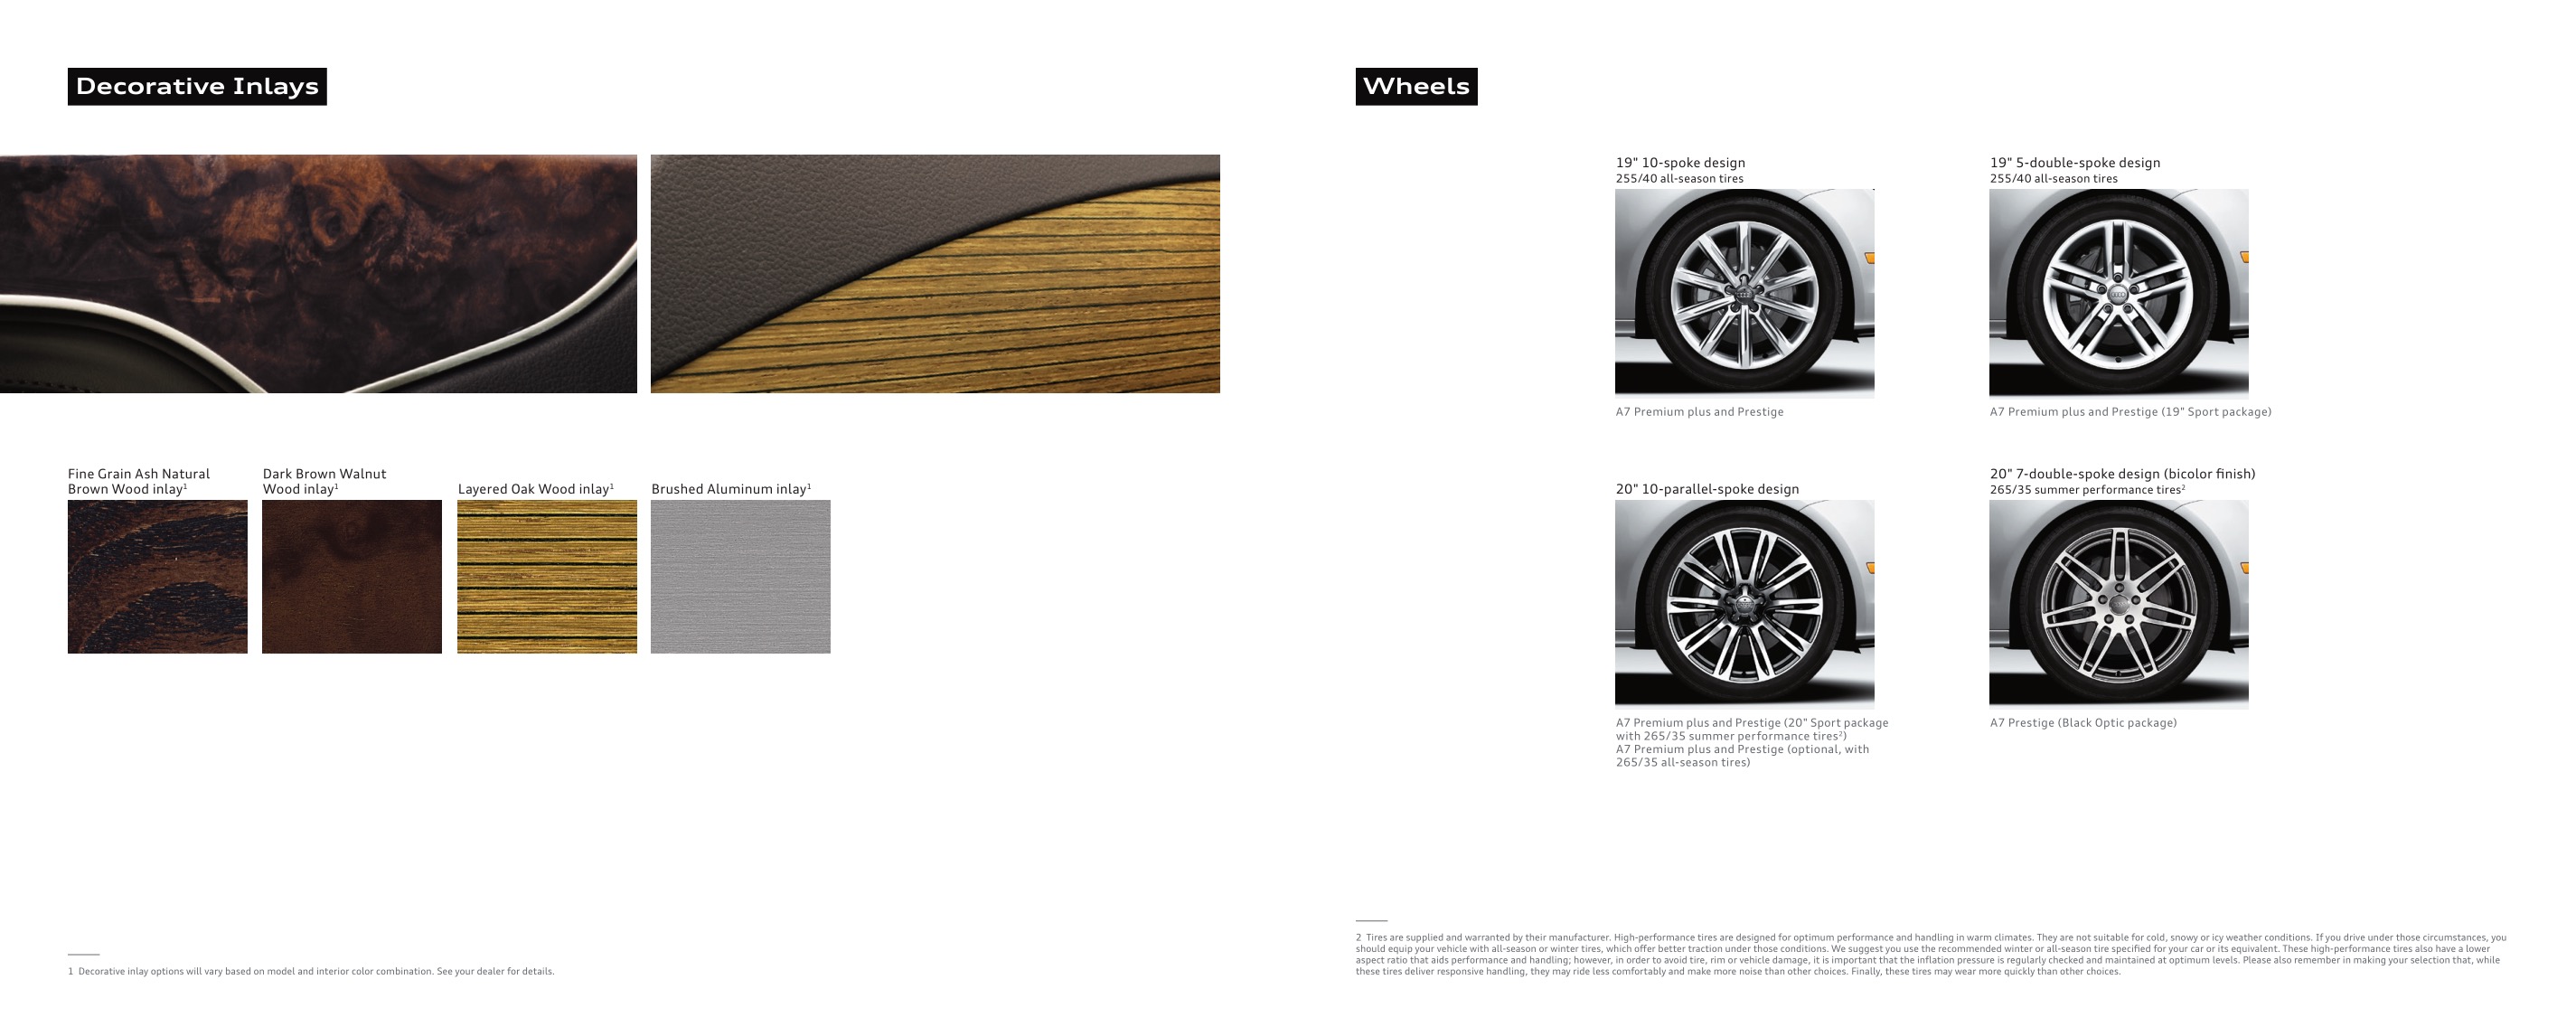 2014 Audi A7 Brochure Page 18